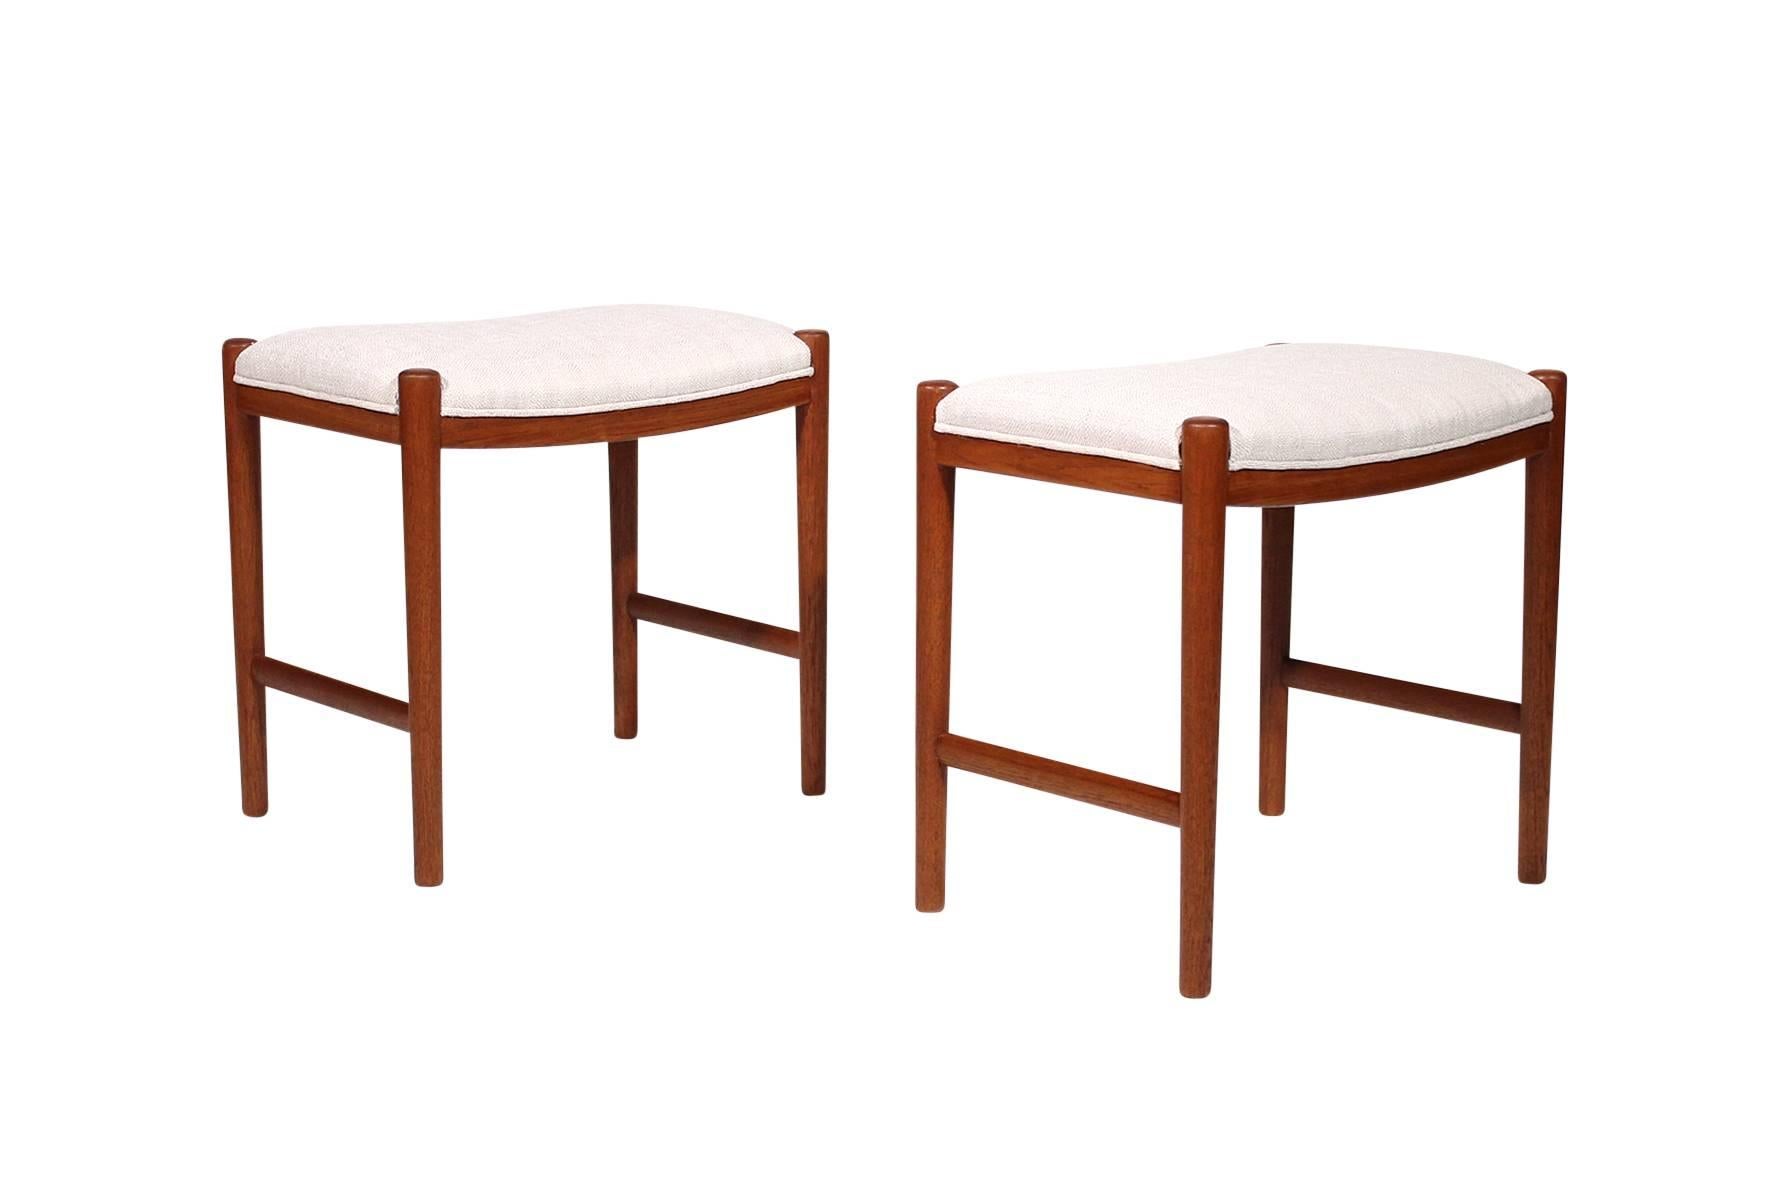 Pair of teak Danish stools in the manner of Hans Wegner's designs.